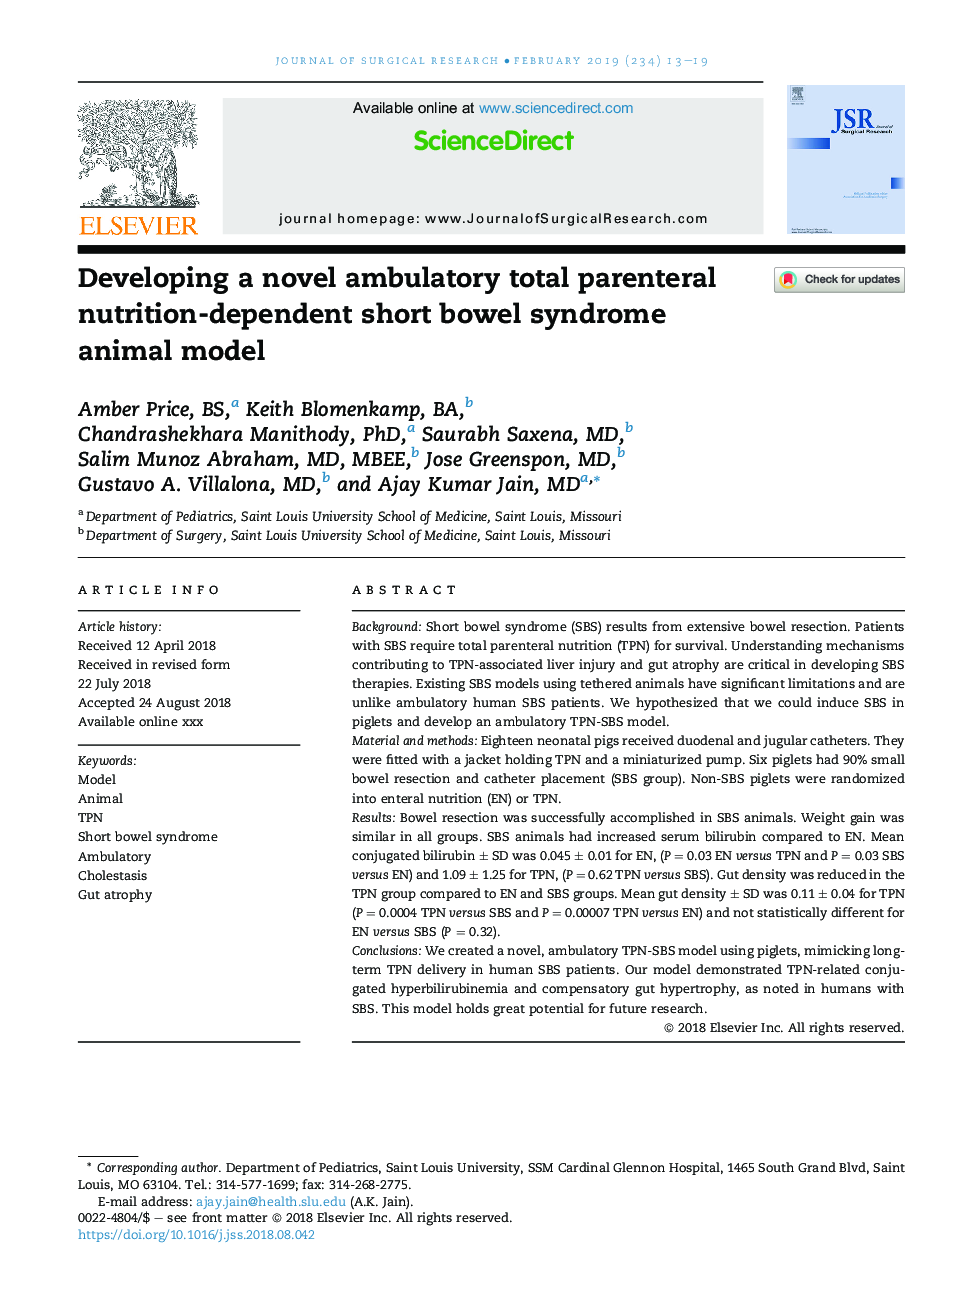 Developing a novel ambulatory total parenteral nutrition-dependent short bowel syndrome animal model